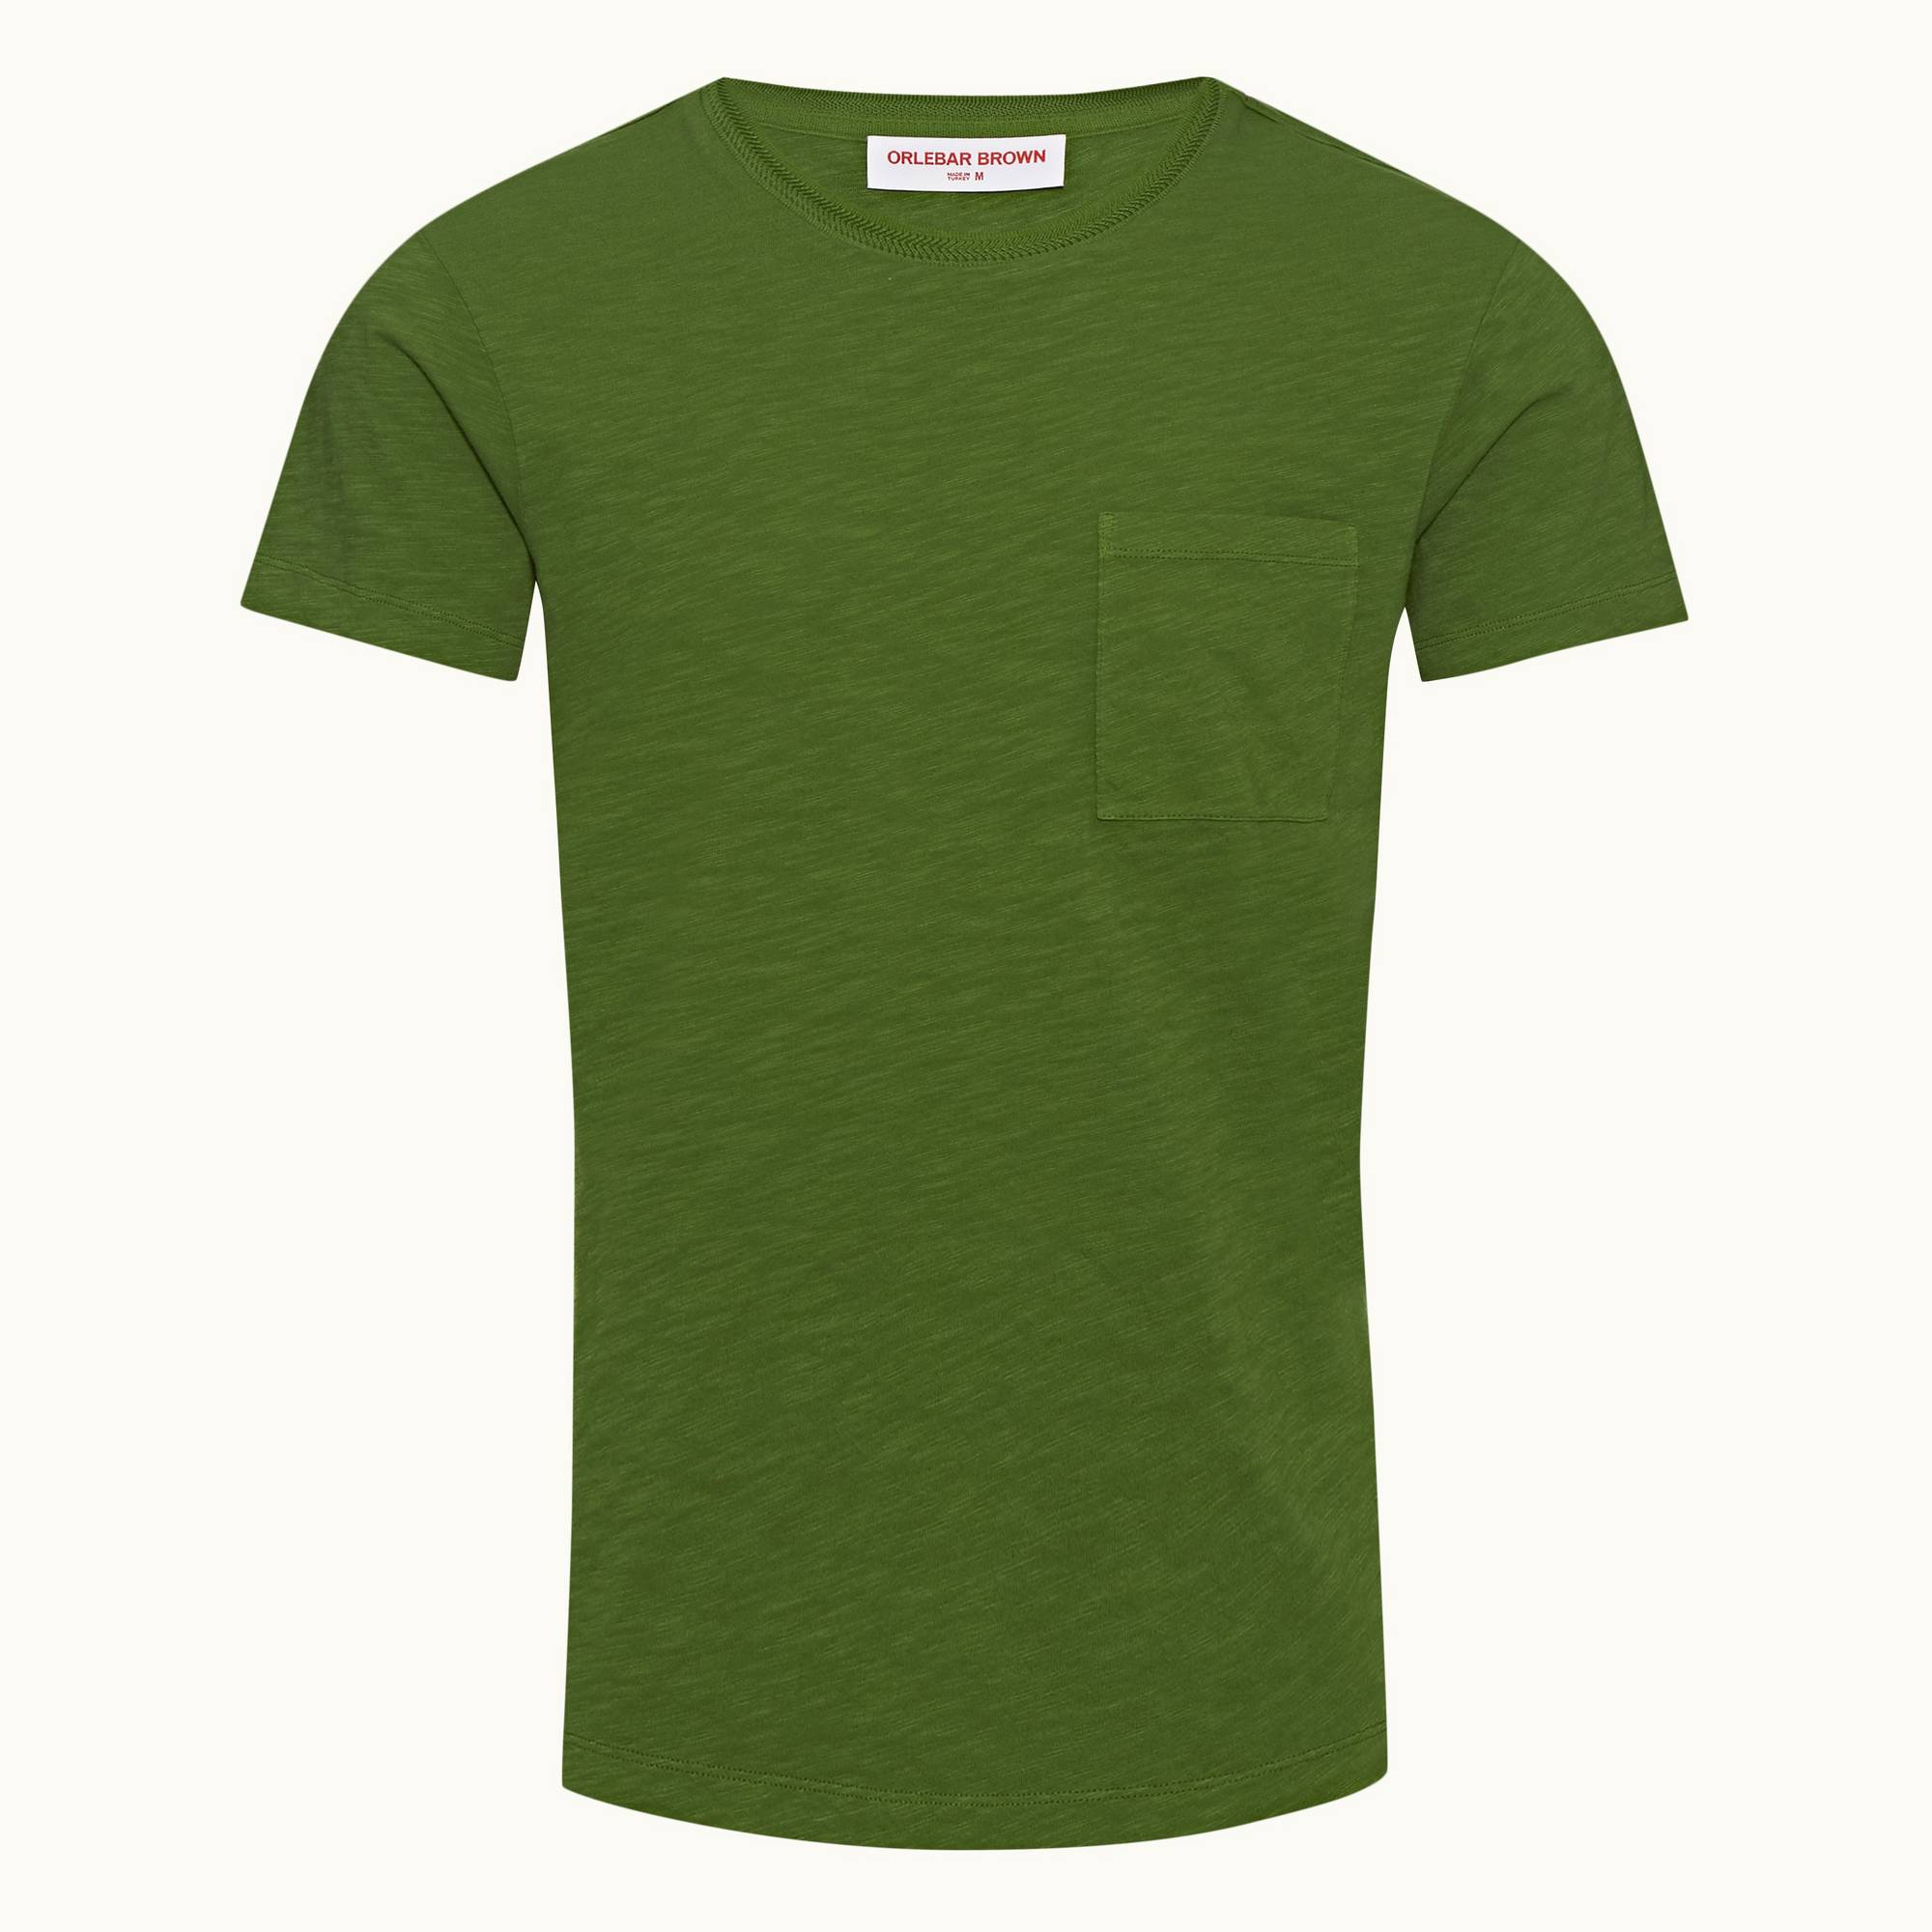 Ob Classic - Mens Conifer Crew Neck Garment Dye Cotton T-shirt